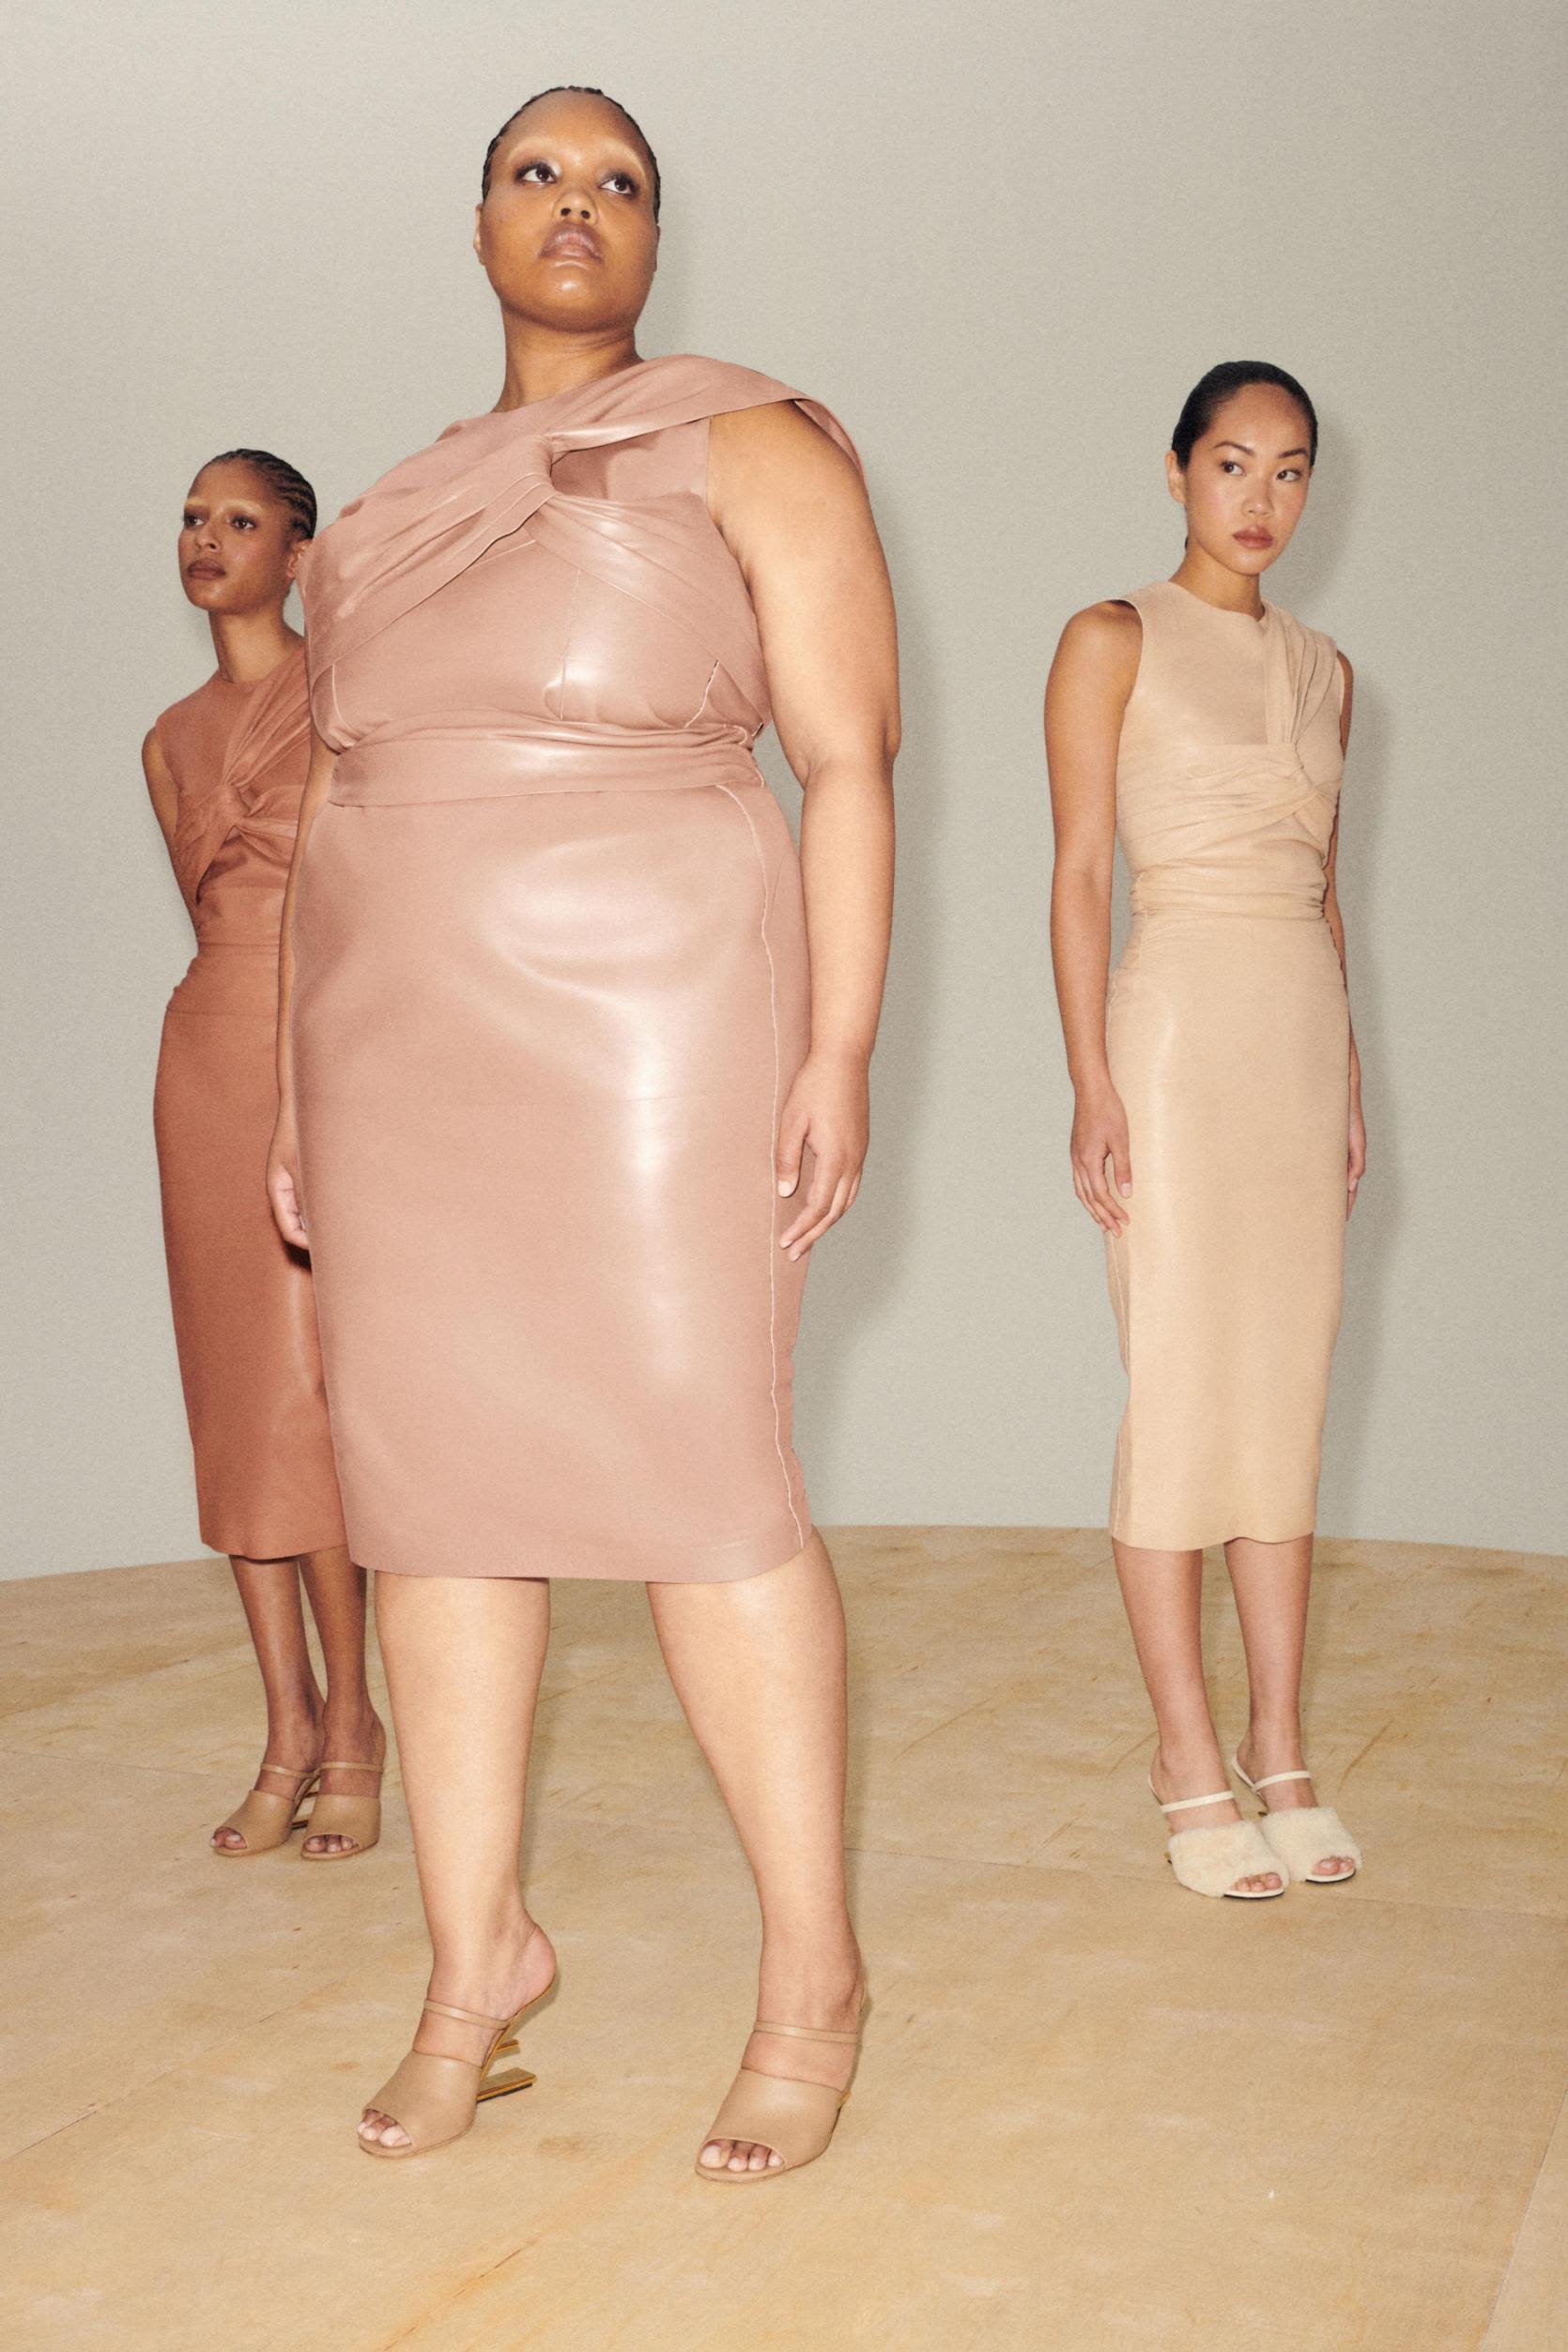 skims #fashion #kimkardashian #kardashian #dress #skimstryon #skimsdr